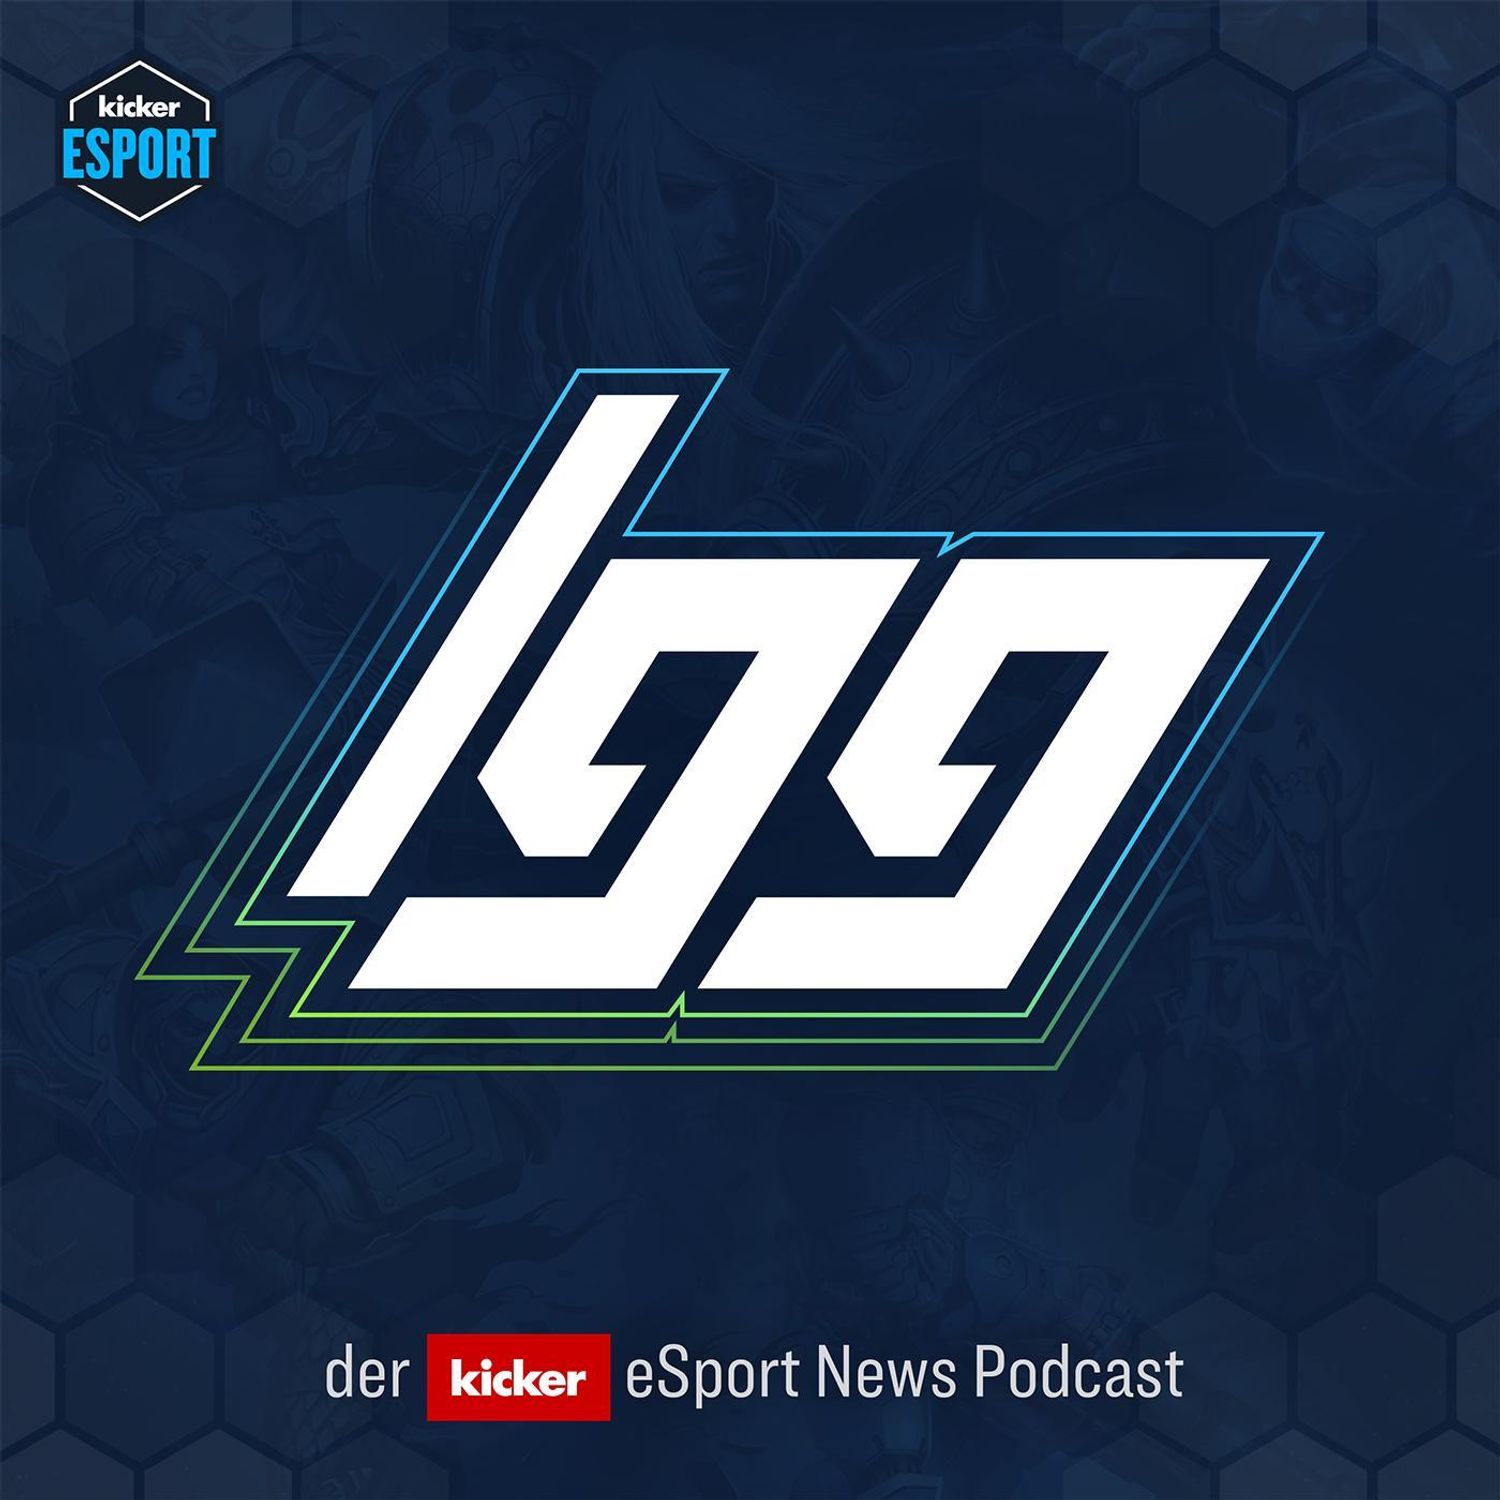 gg - kicker eSport News - Podcast